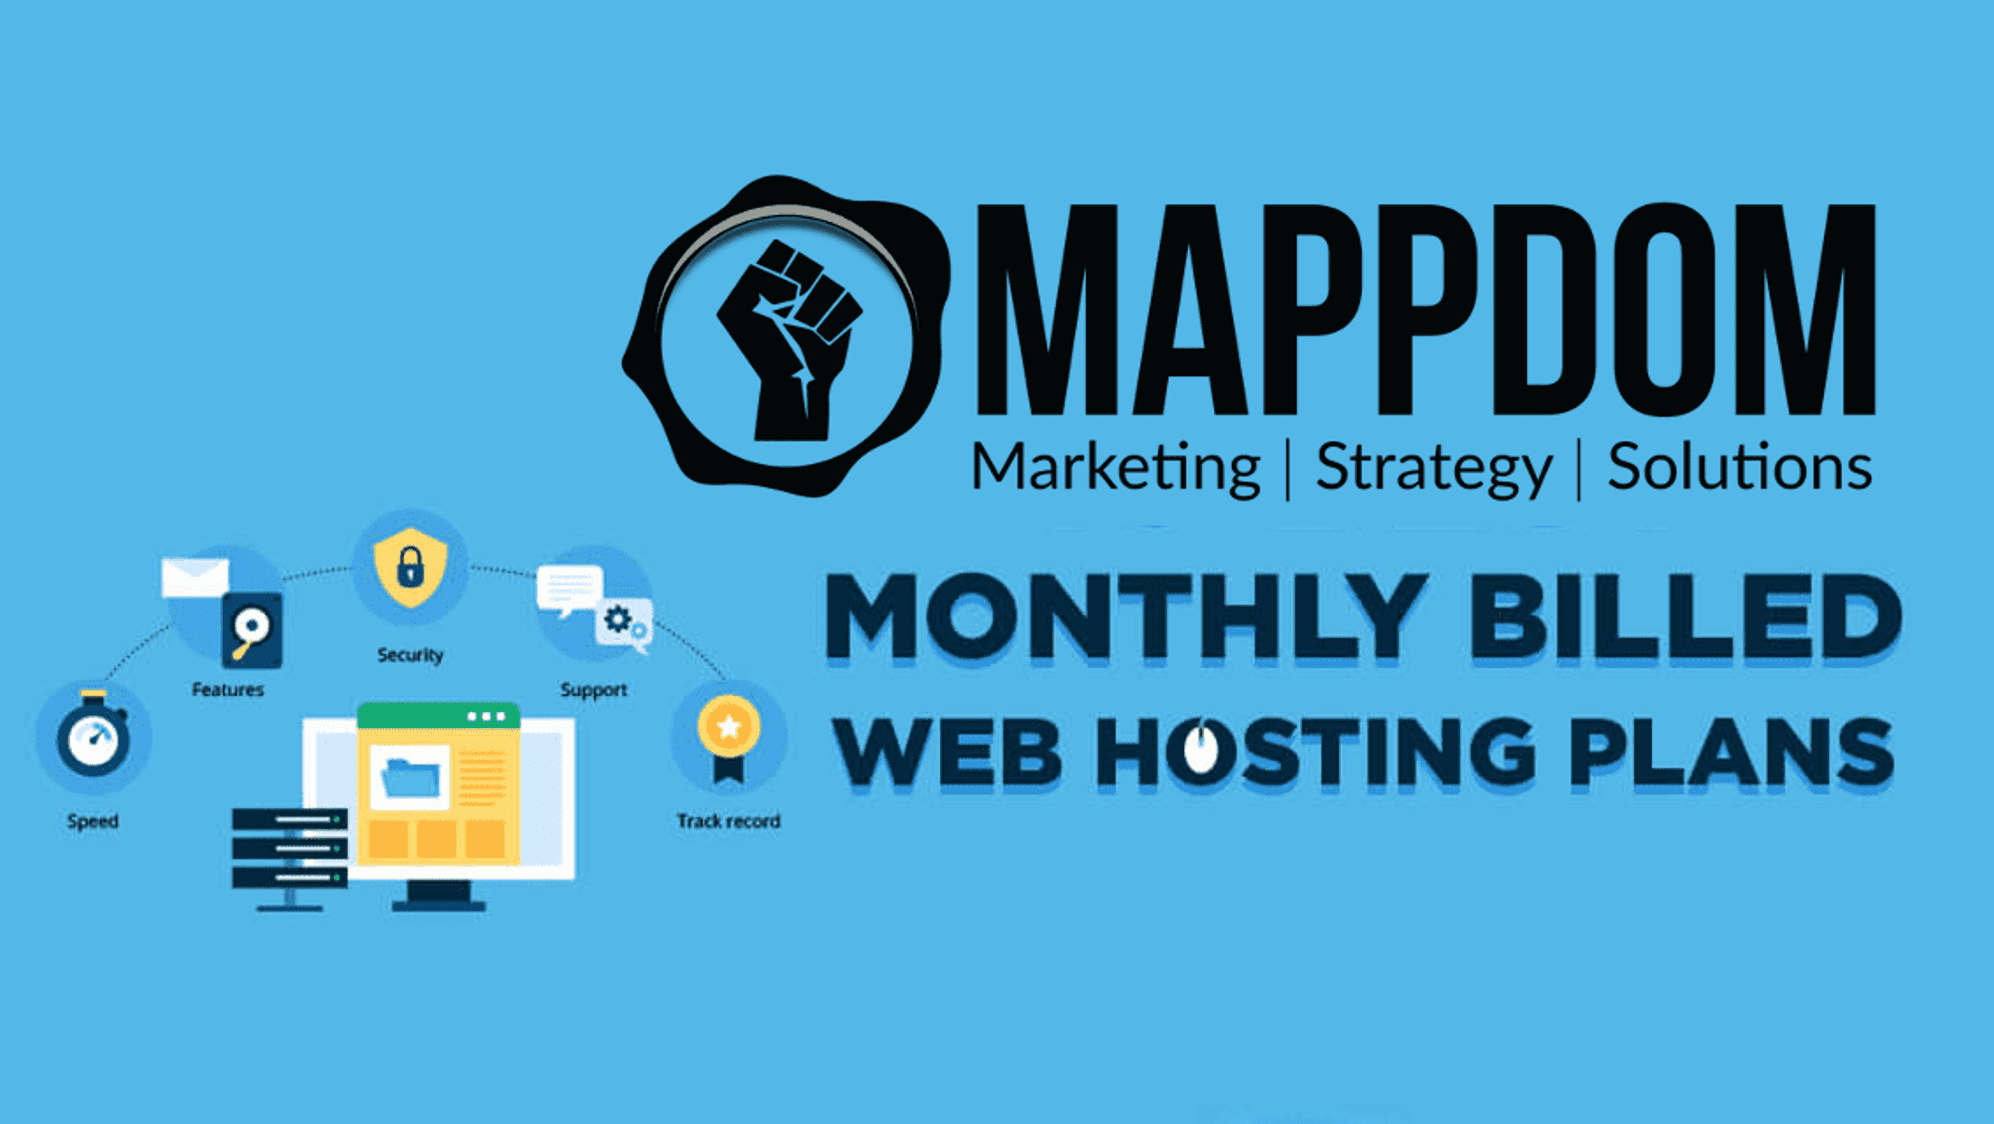 Mappdom monthly web hosting